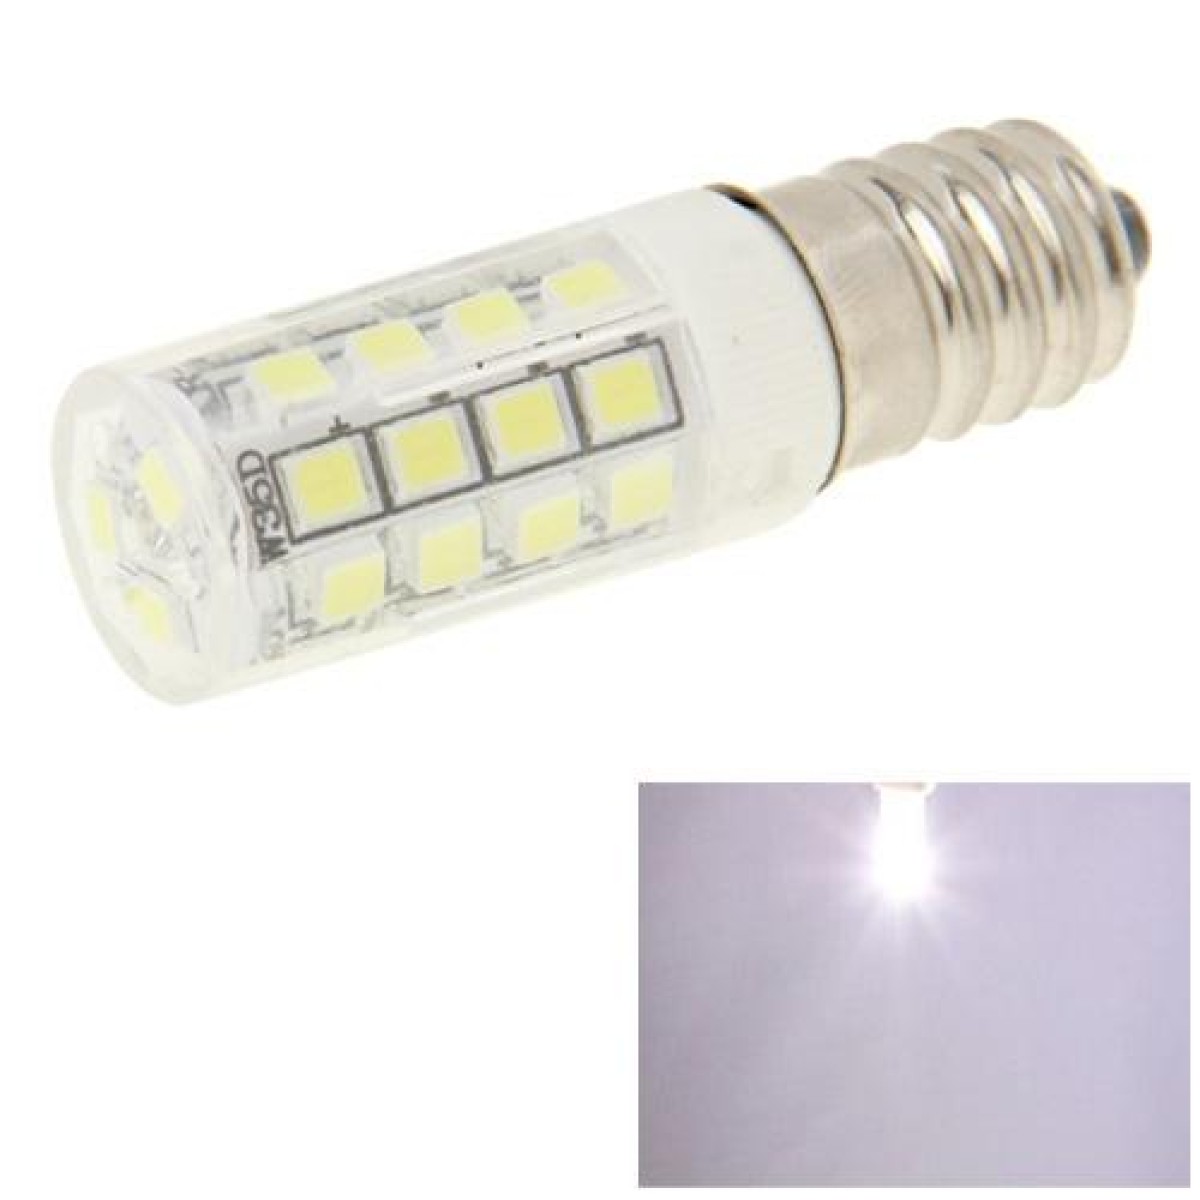 E14 3W 200LM  Corn Light Bulb, 26 LED SMD 2835, White Light, AC 220V